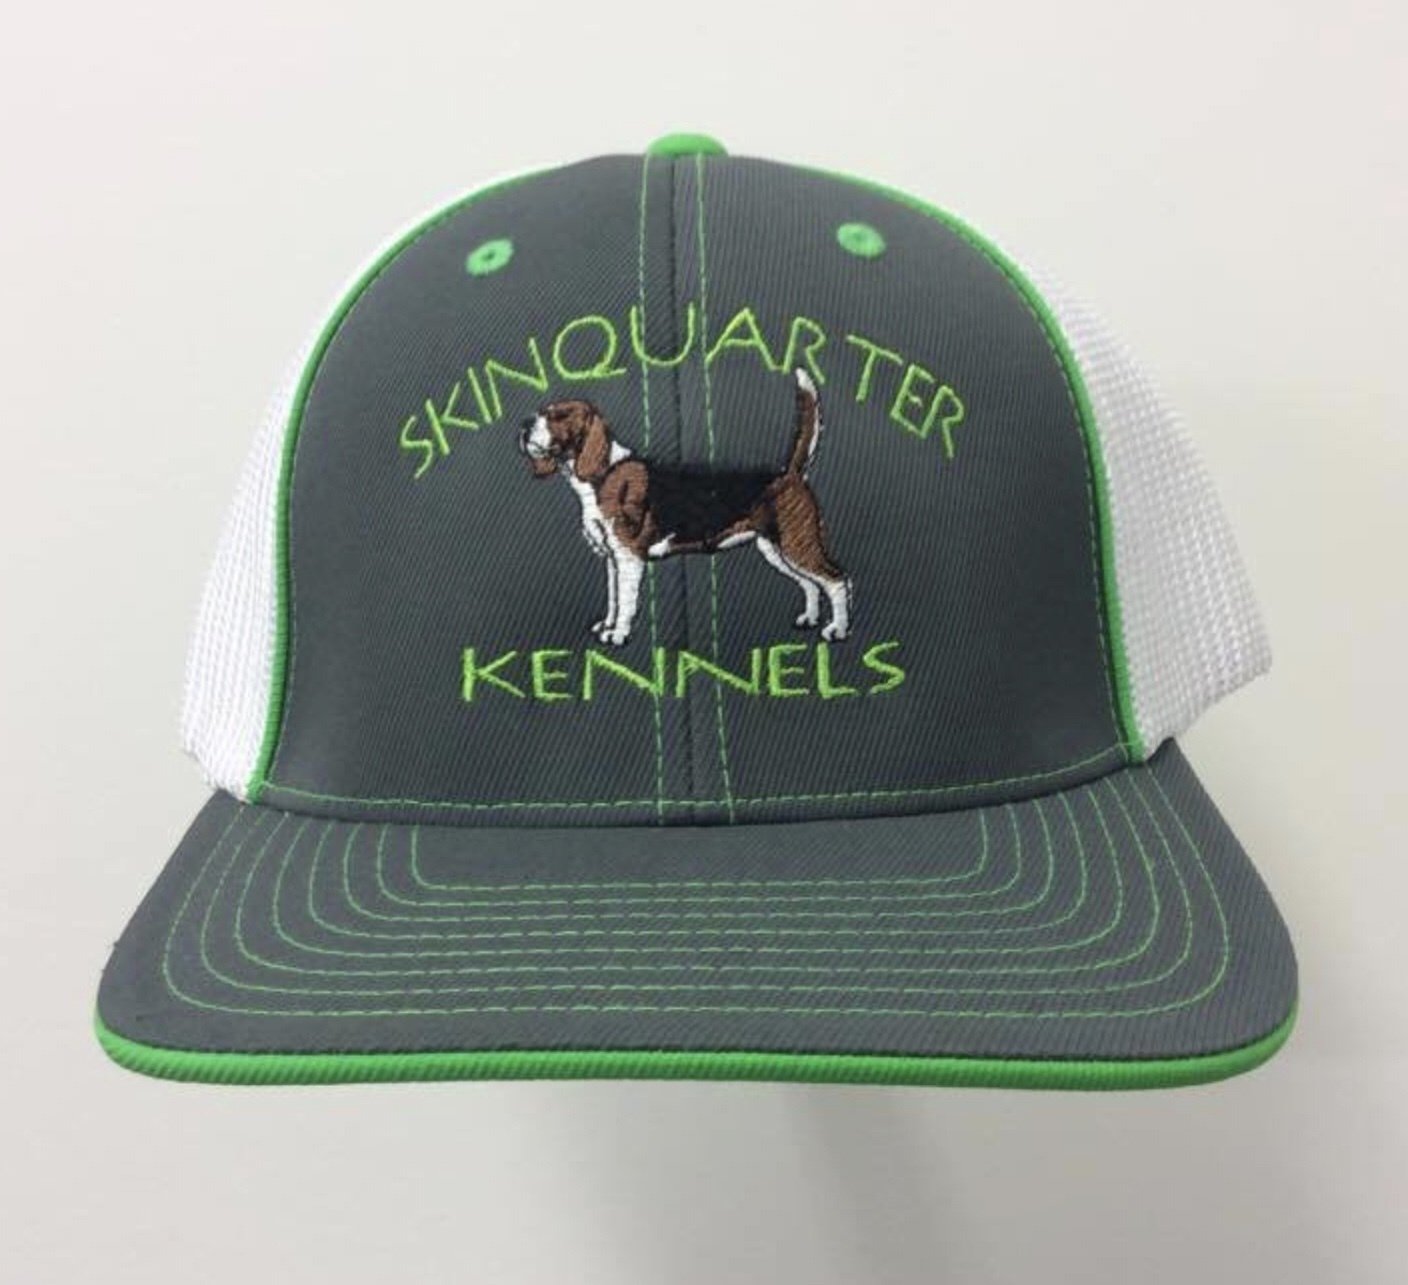 Benching Tri-Beagle Design Flex Fit Custom Hat - 68 Hat Colors Available